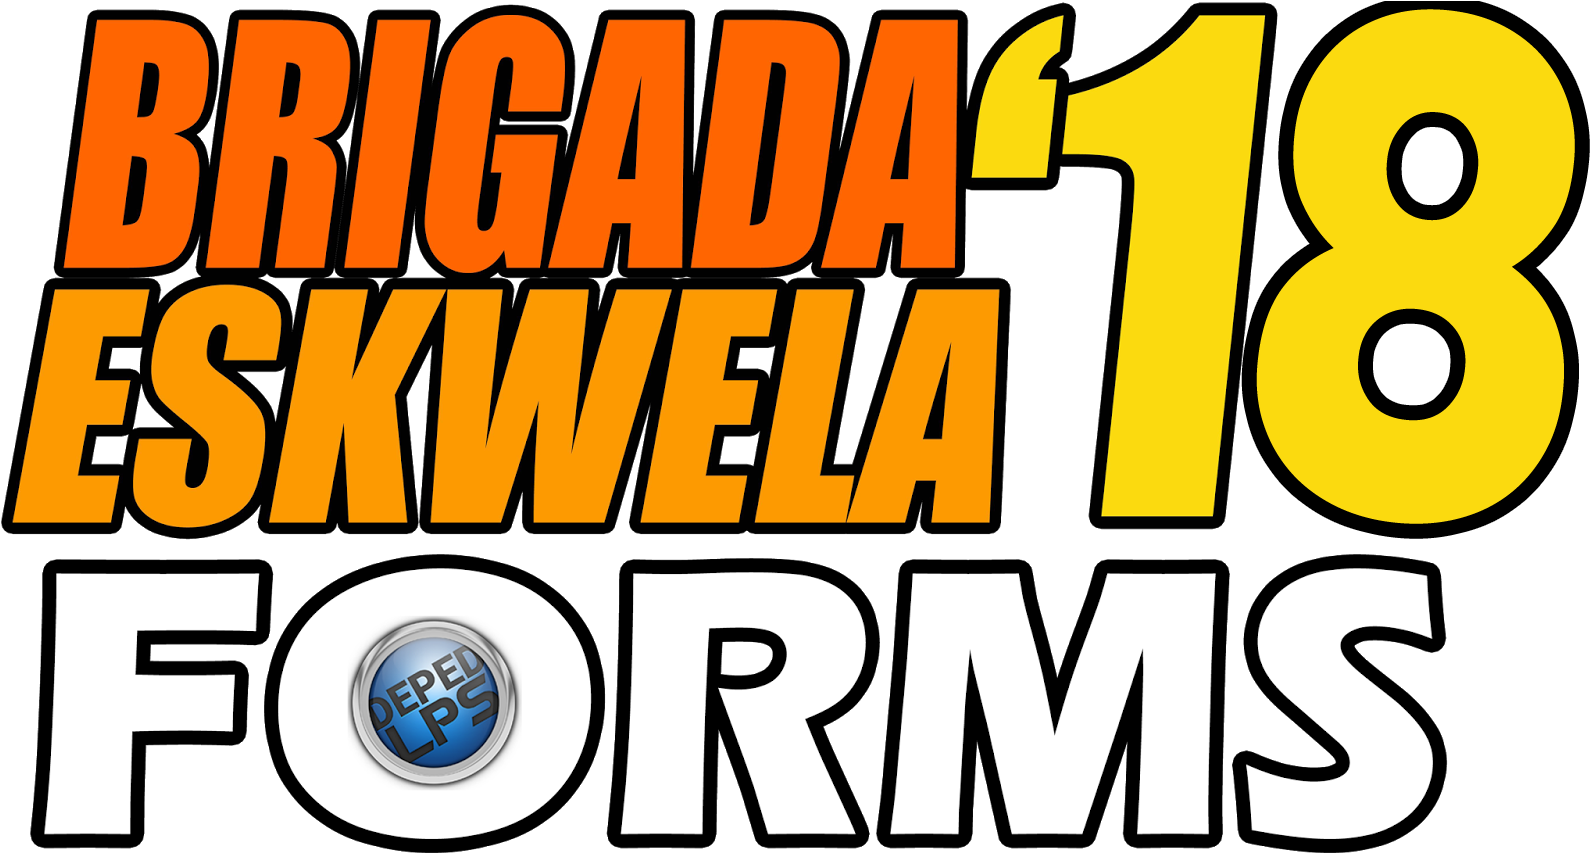 Brigada Eskwela 2018 Complete Downloadable School Forms - Deped Brigada Eskwela 2018 (1600x852)